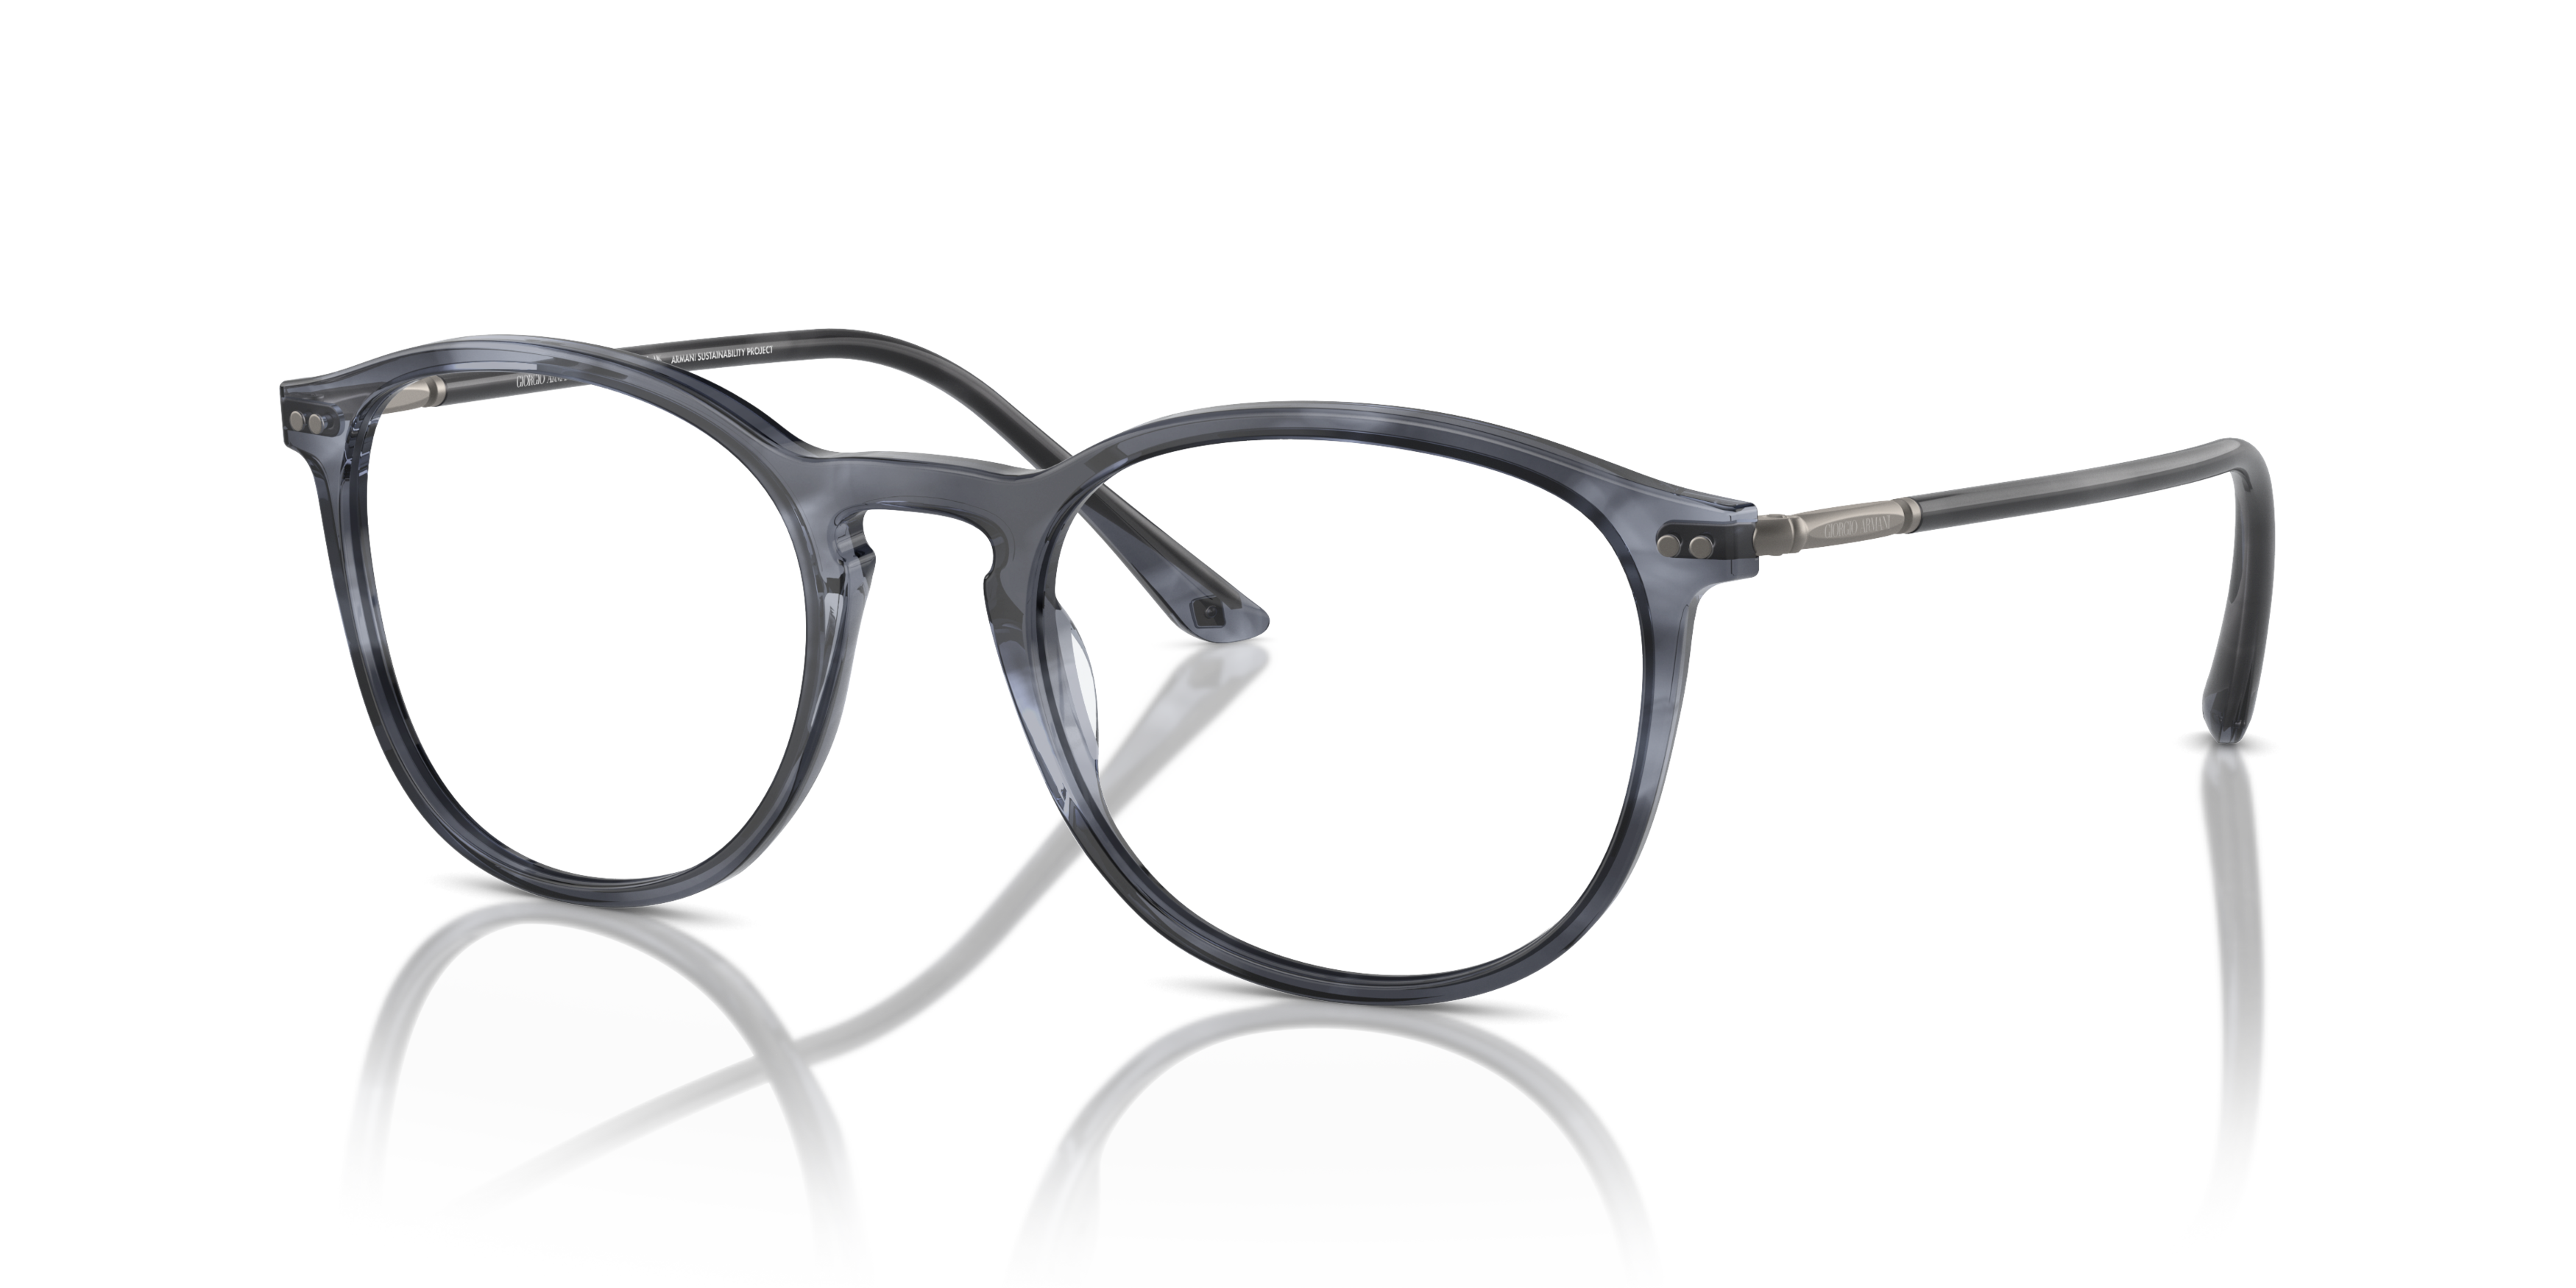 Angle_Left01 Giorgio Armani AR 7125 Glasses Transparent / Tortoise Shell